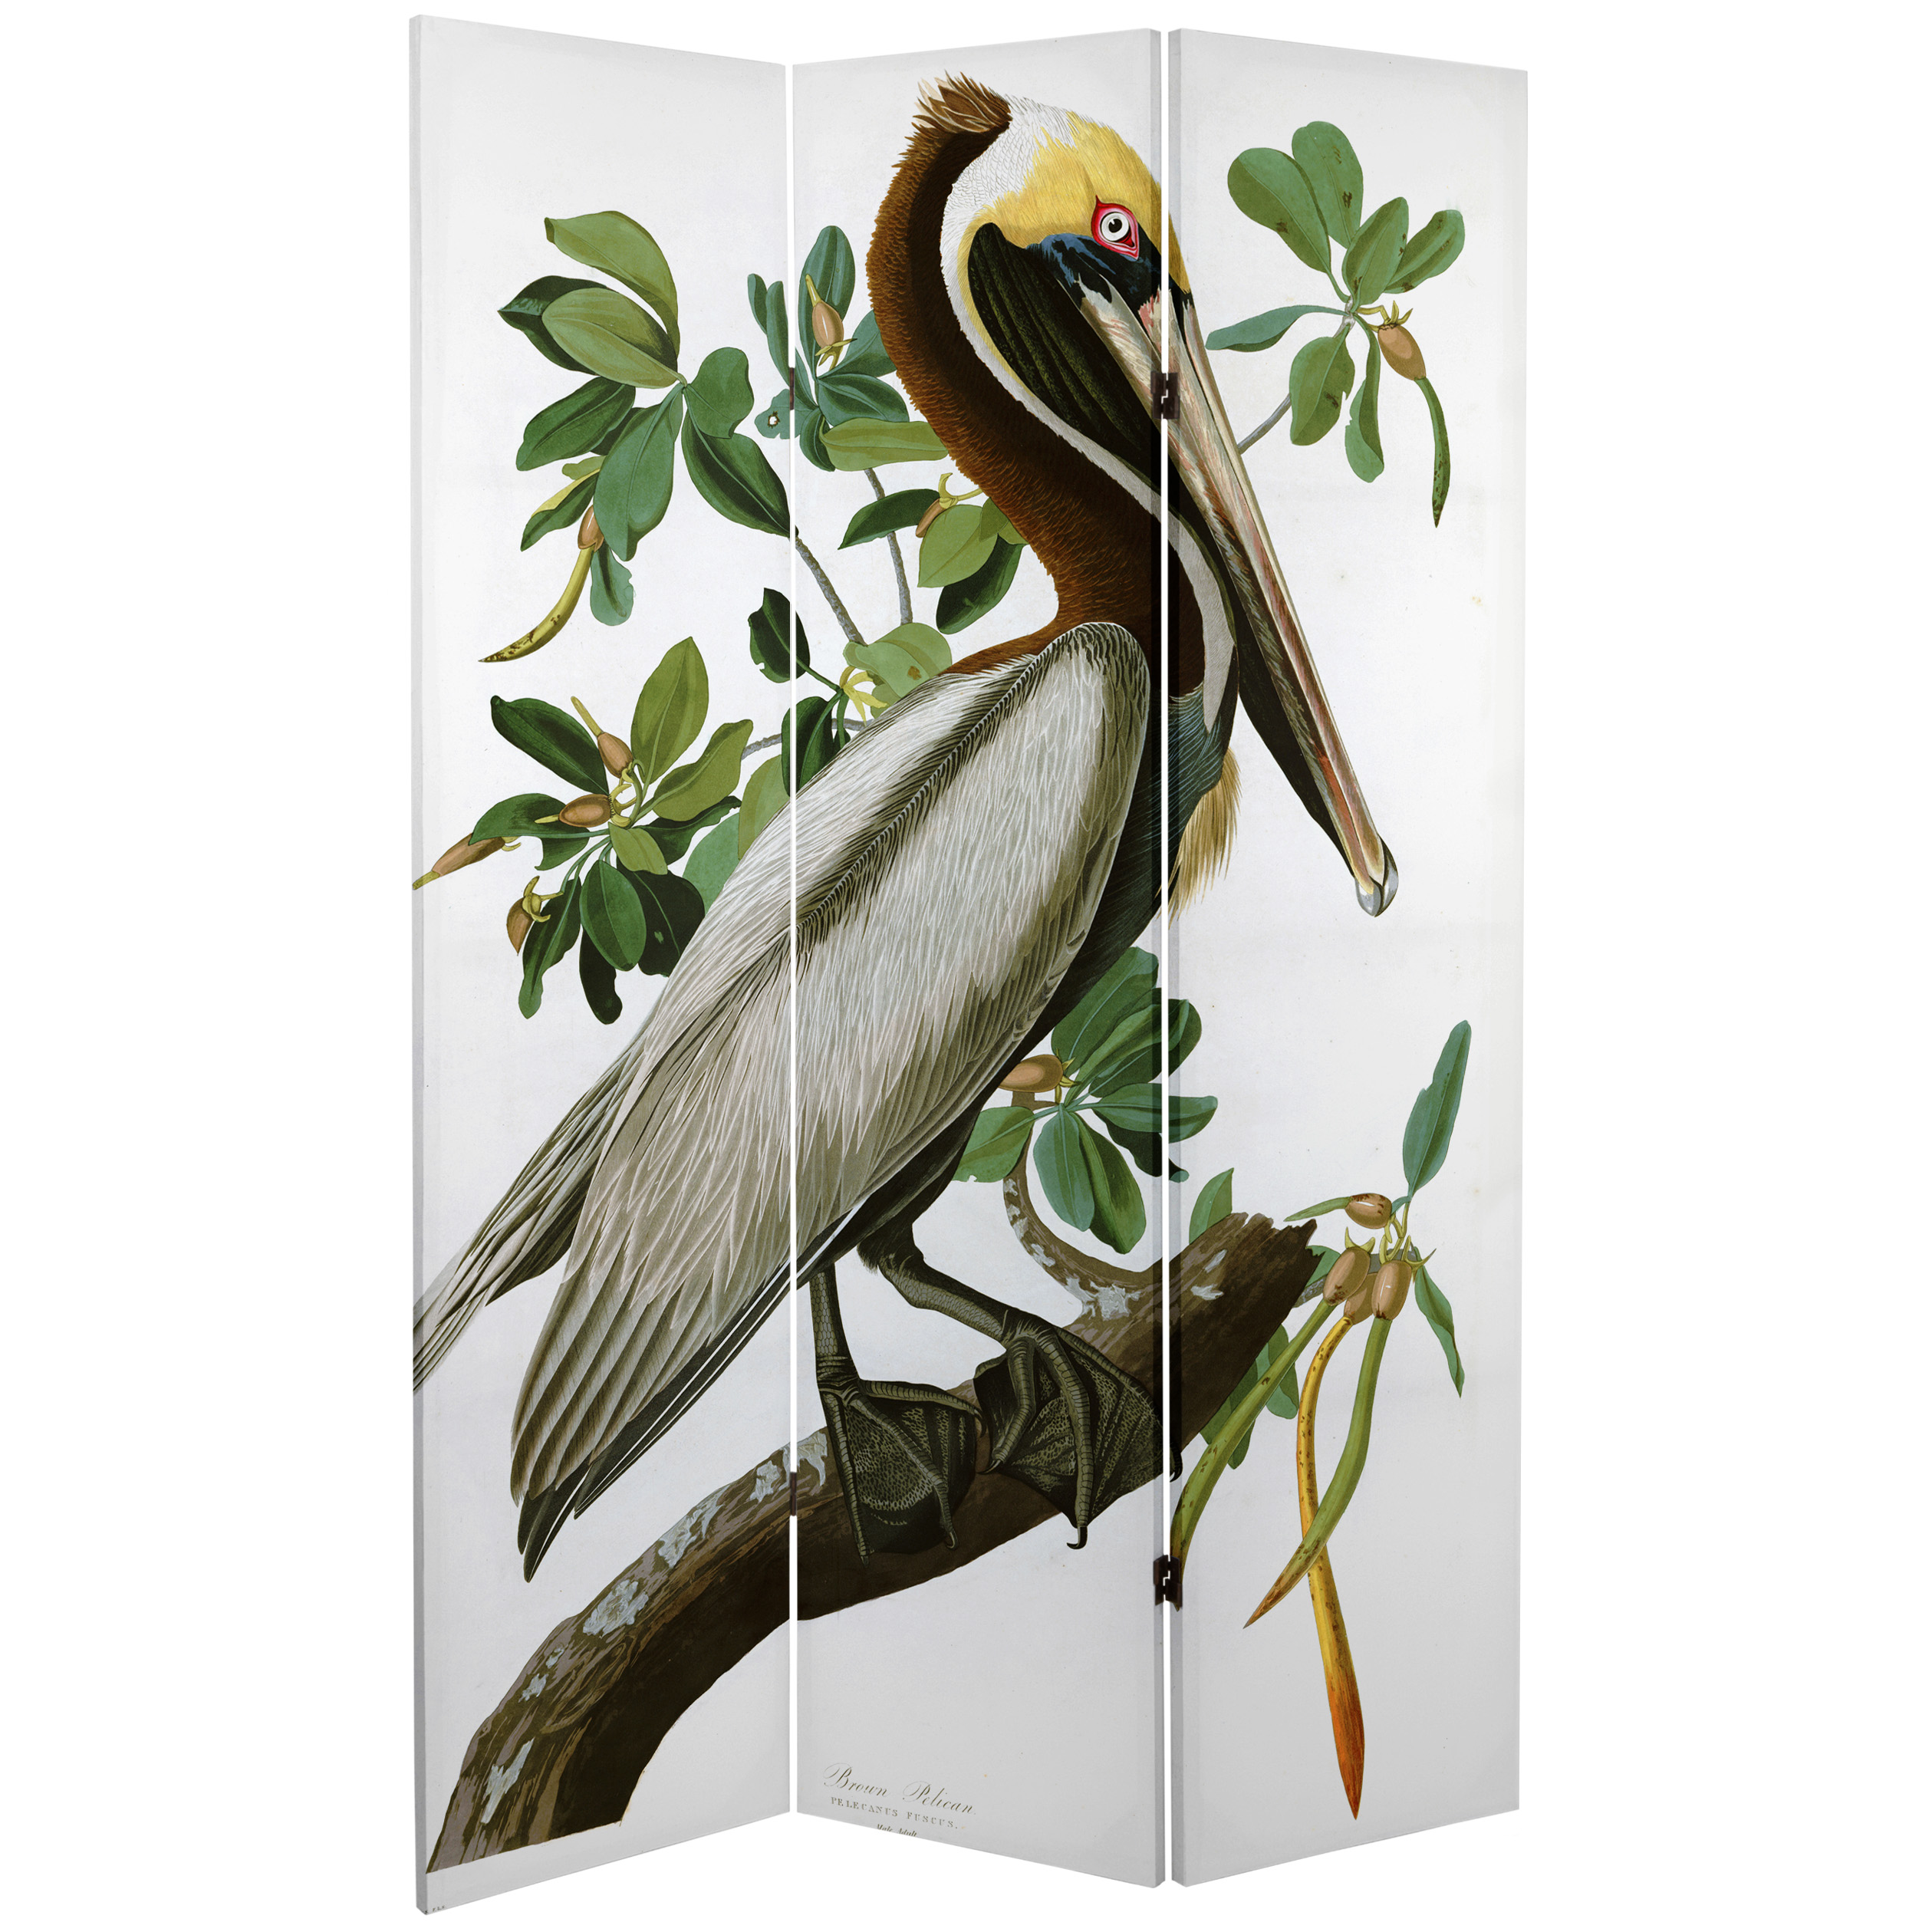 6 ft. Tall Audubon Pelican Canvas Print Room Divider Floor Screen - image 2 of 3